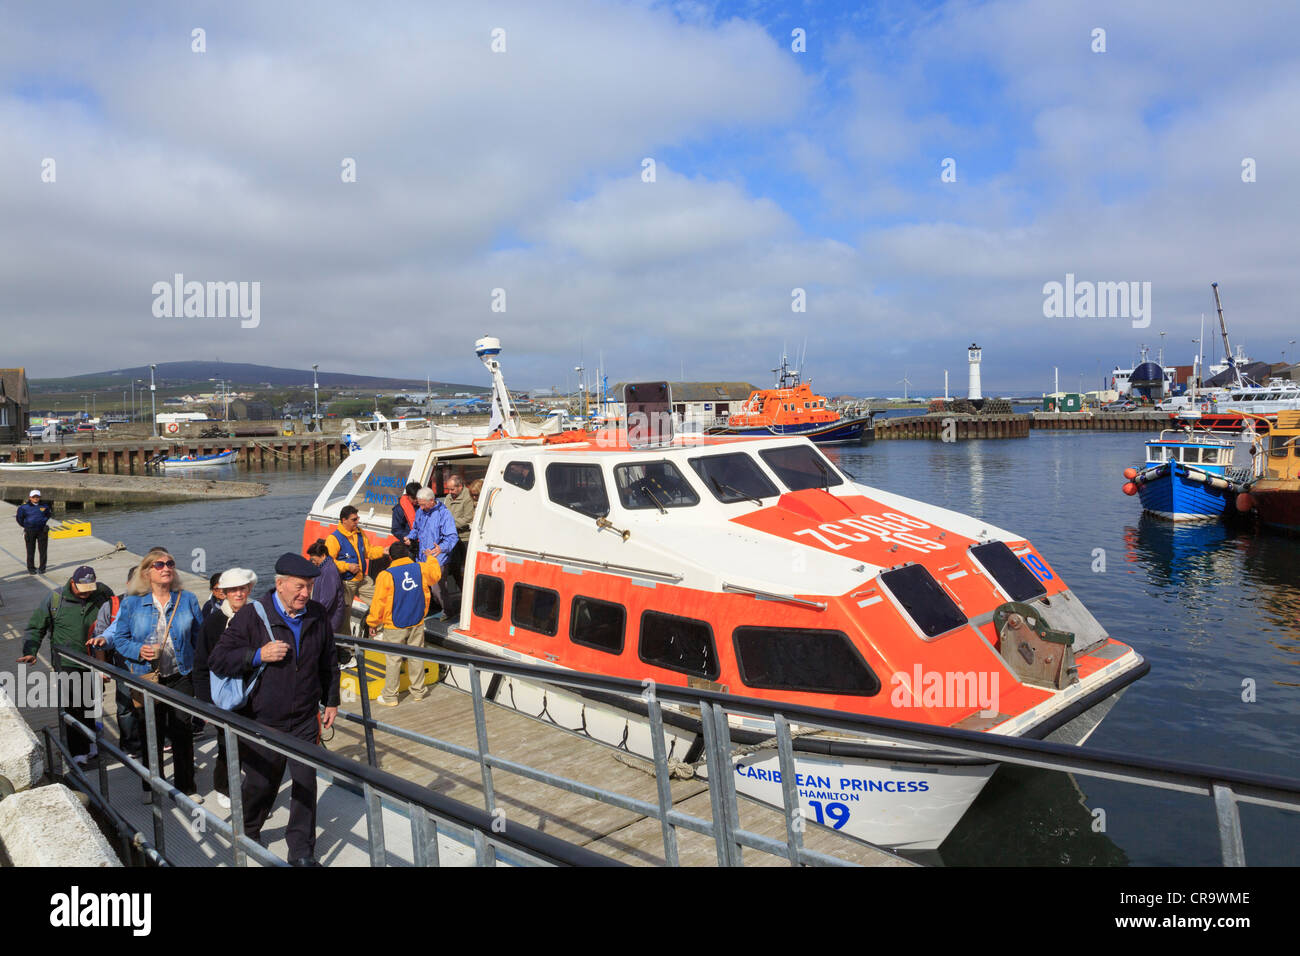 American tourists disembarking Caribbean Princess cruise ship landing craft arriving in Kirkwall harbour visiting Mainland Orkney Stock Photo